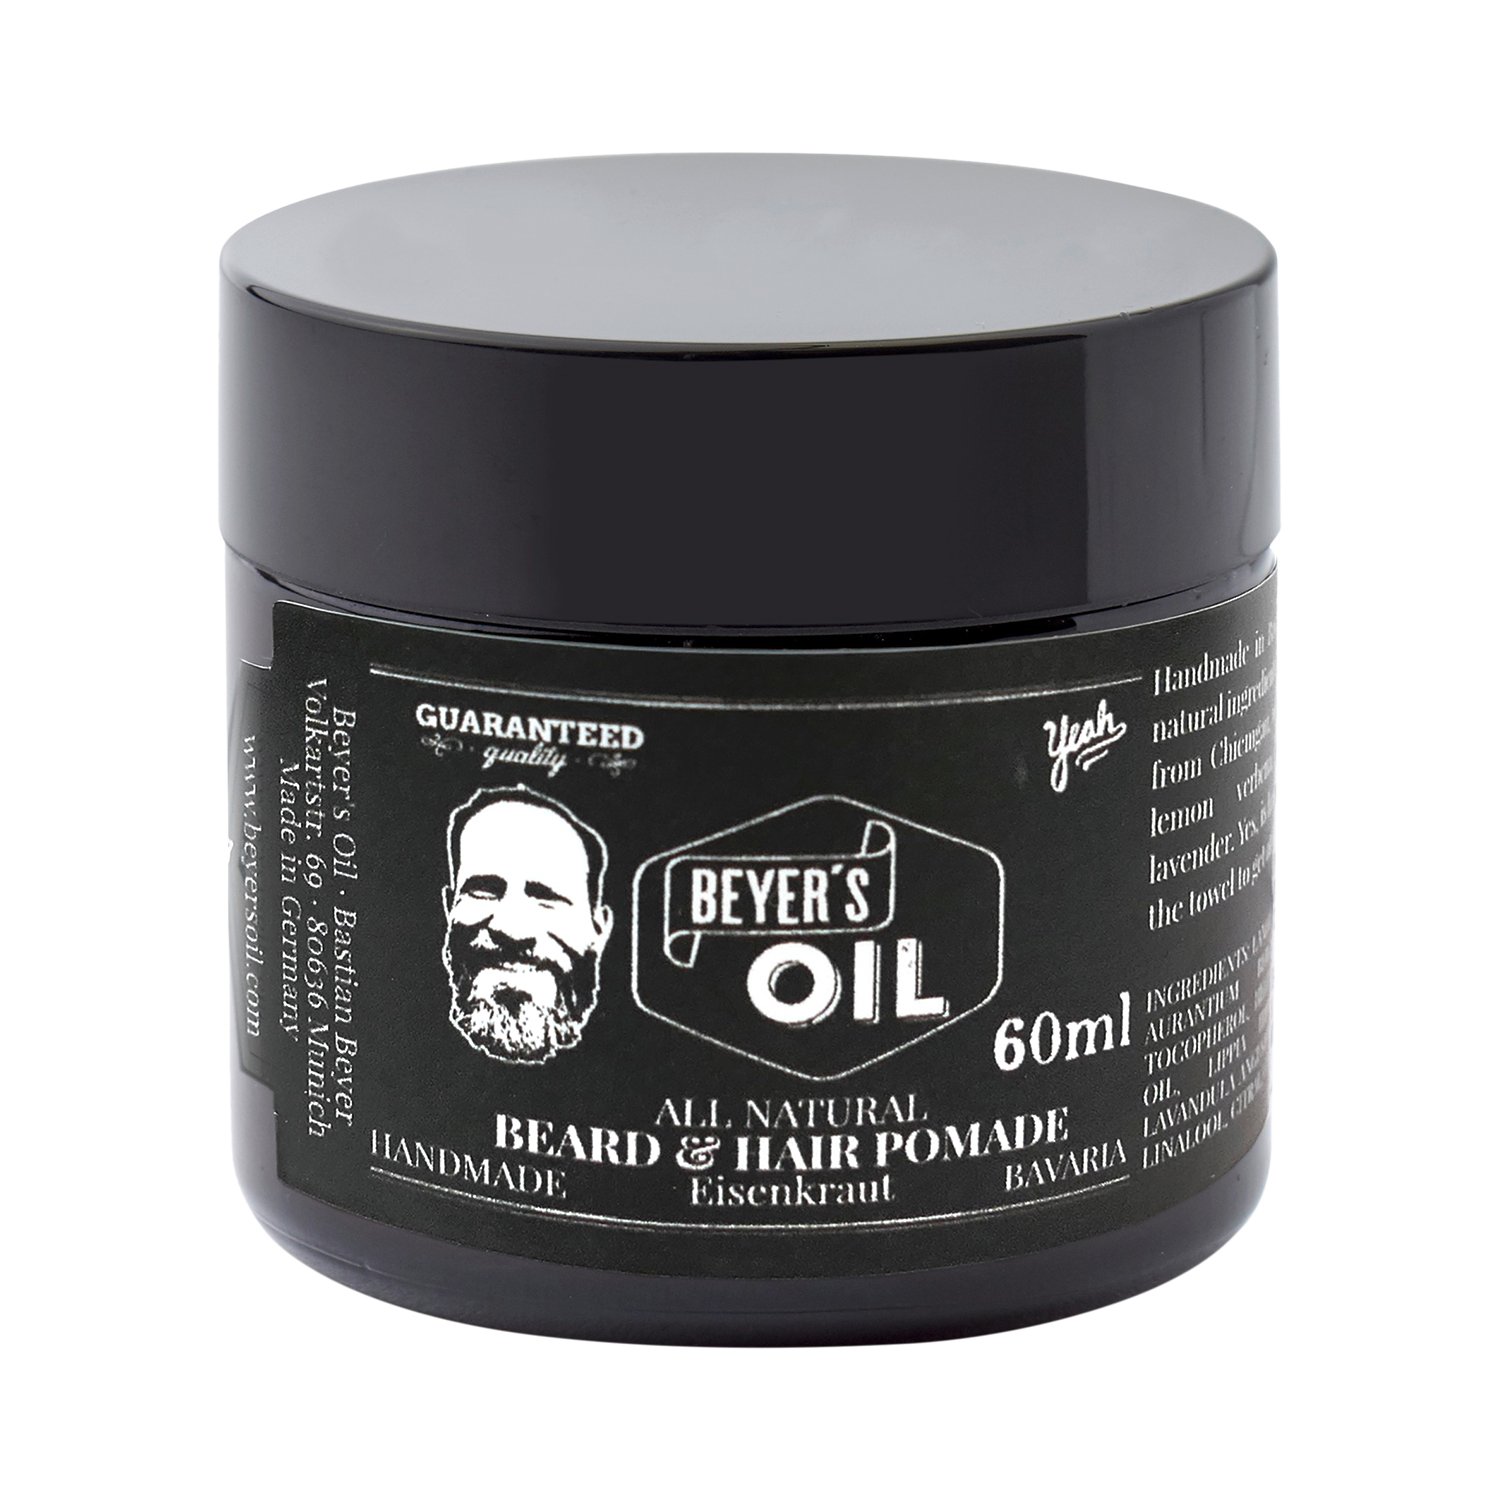 Beyer's Oil - Beard & Hair Pomade - Bart- und Haarpomade